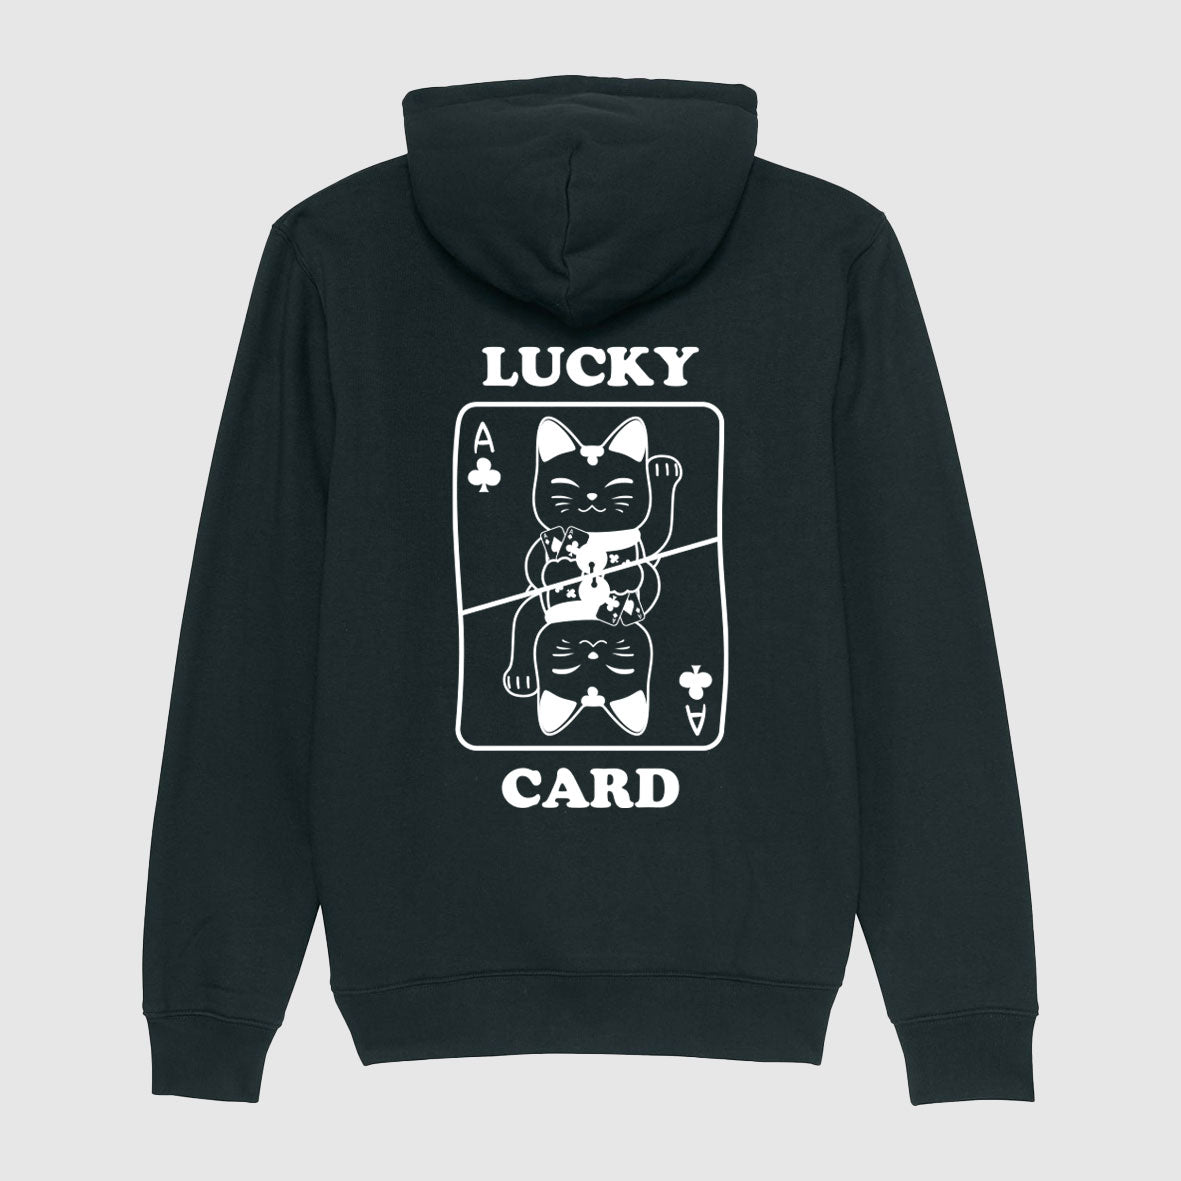 Hoodie lucky card